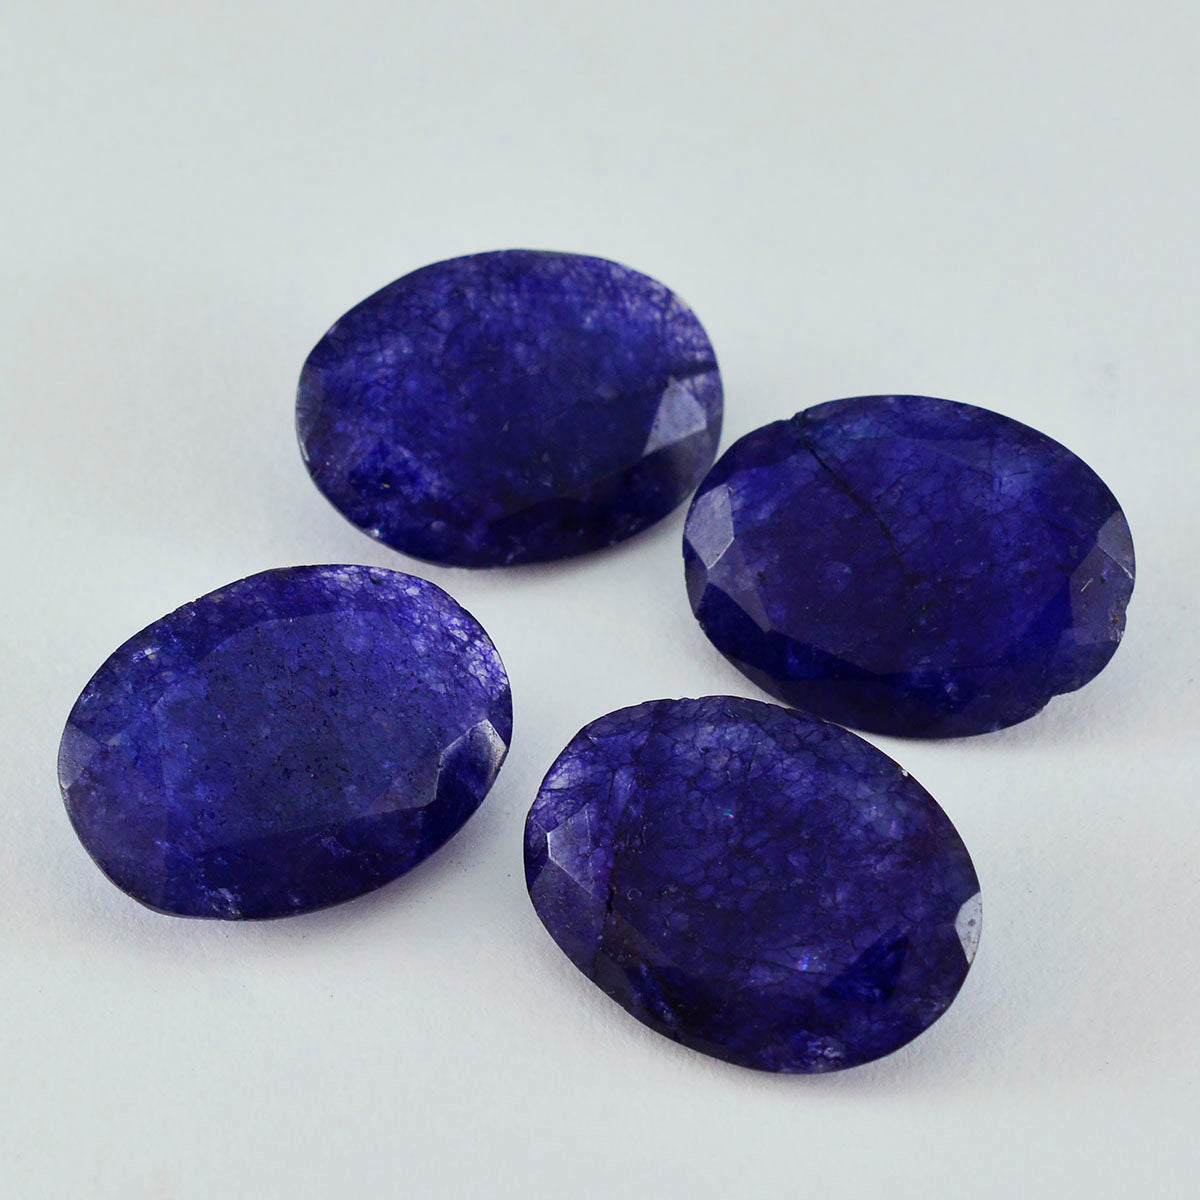 riyogems 1 pz genuino diaspro blu sfaccettato 10x14 mm forma ovale gemme sfuse di qualità gradevole